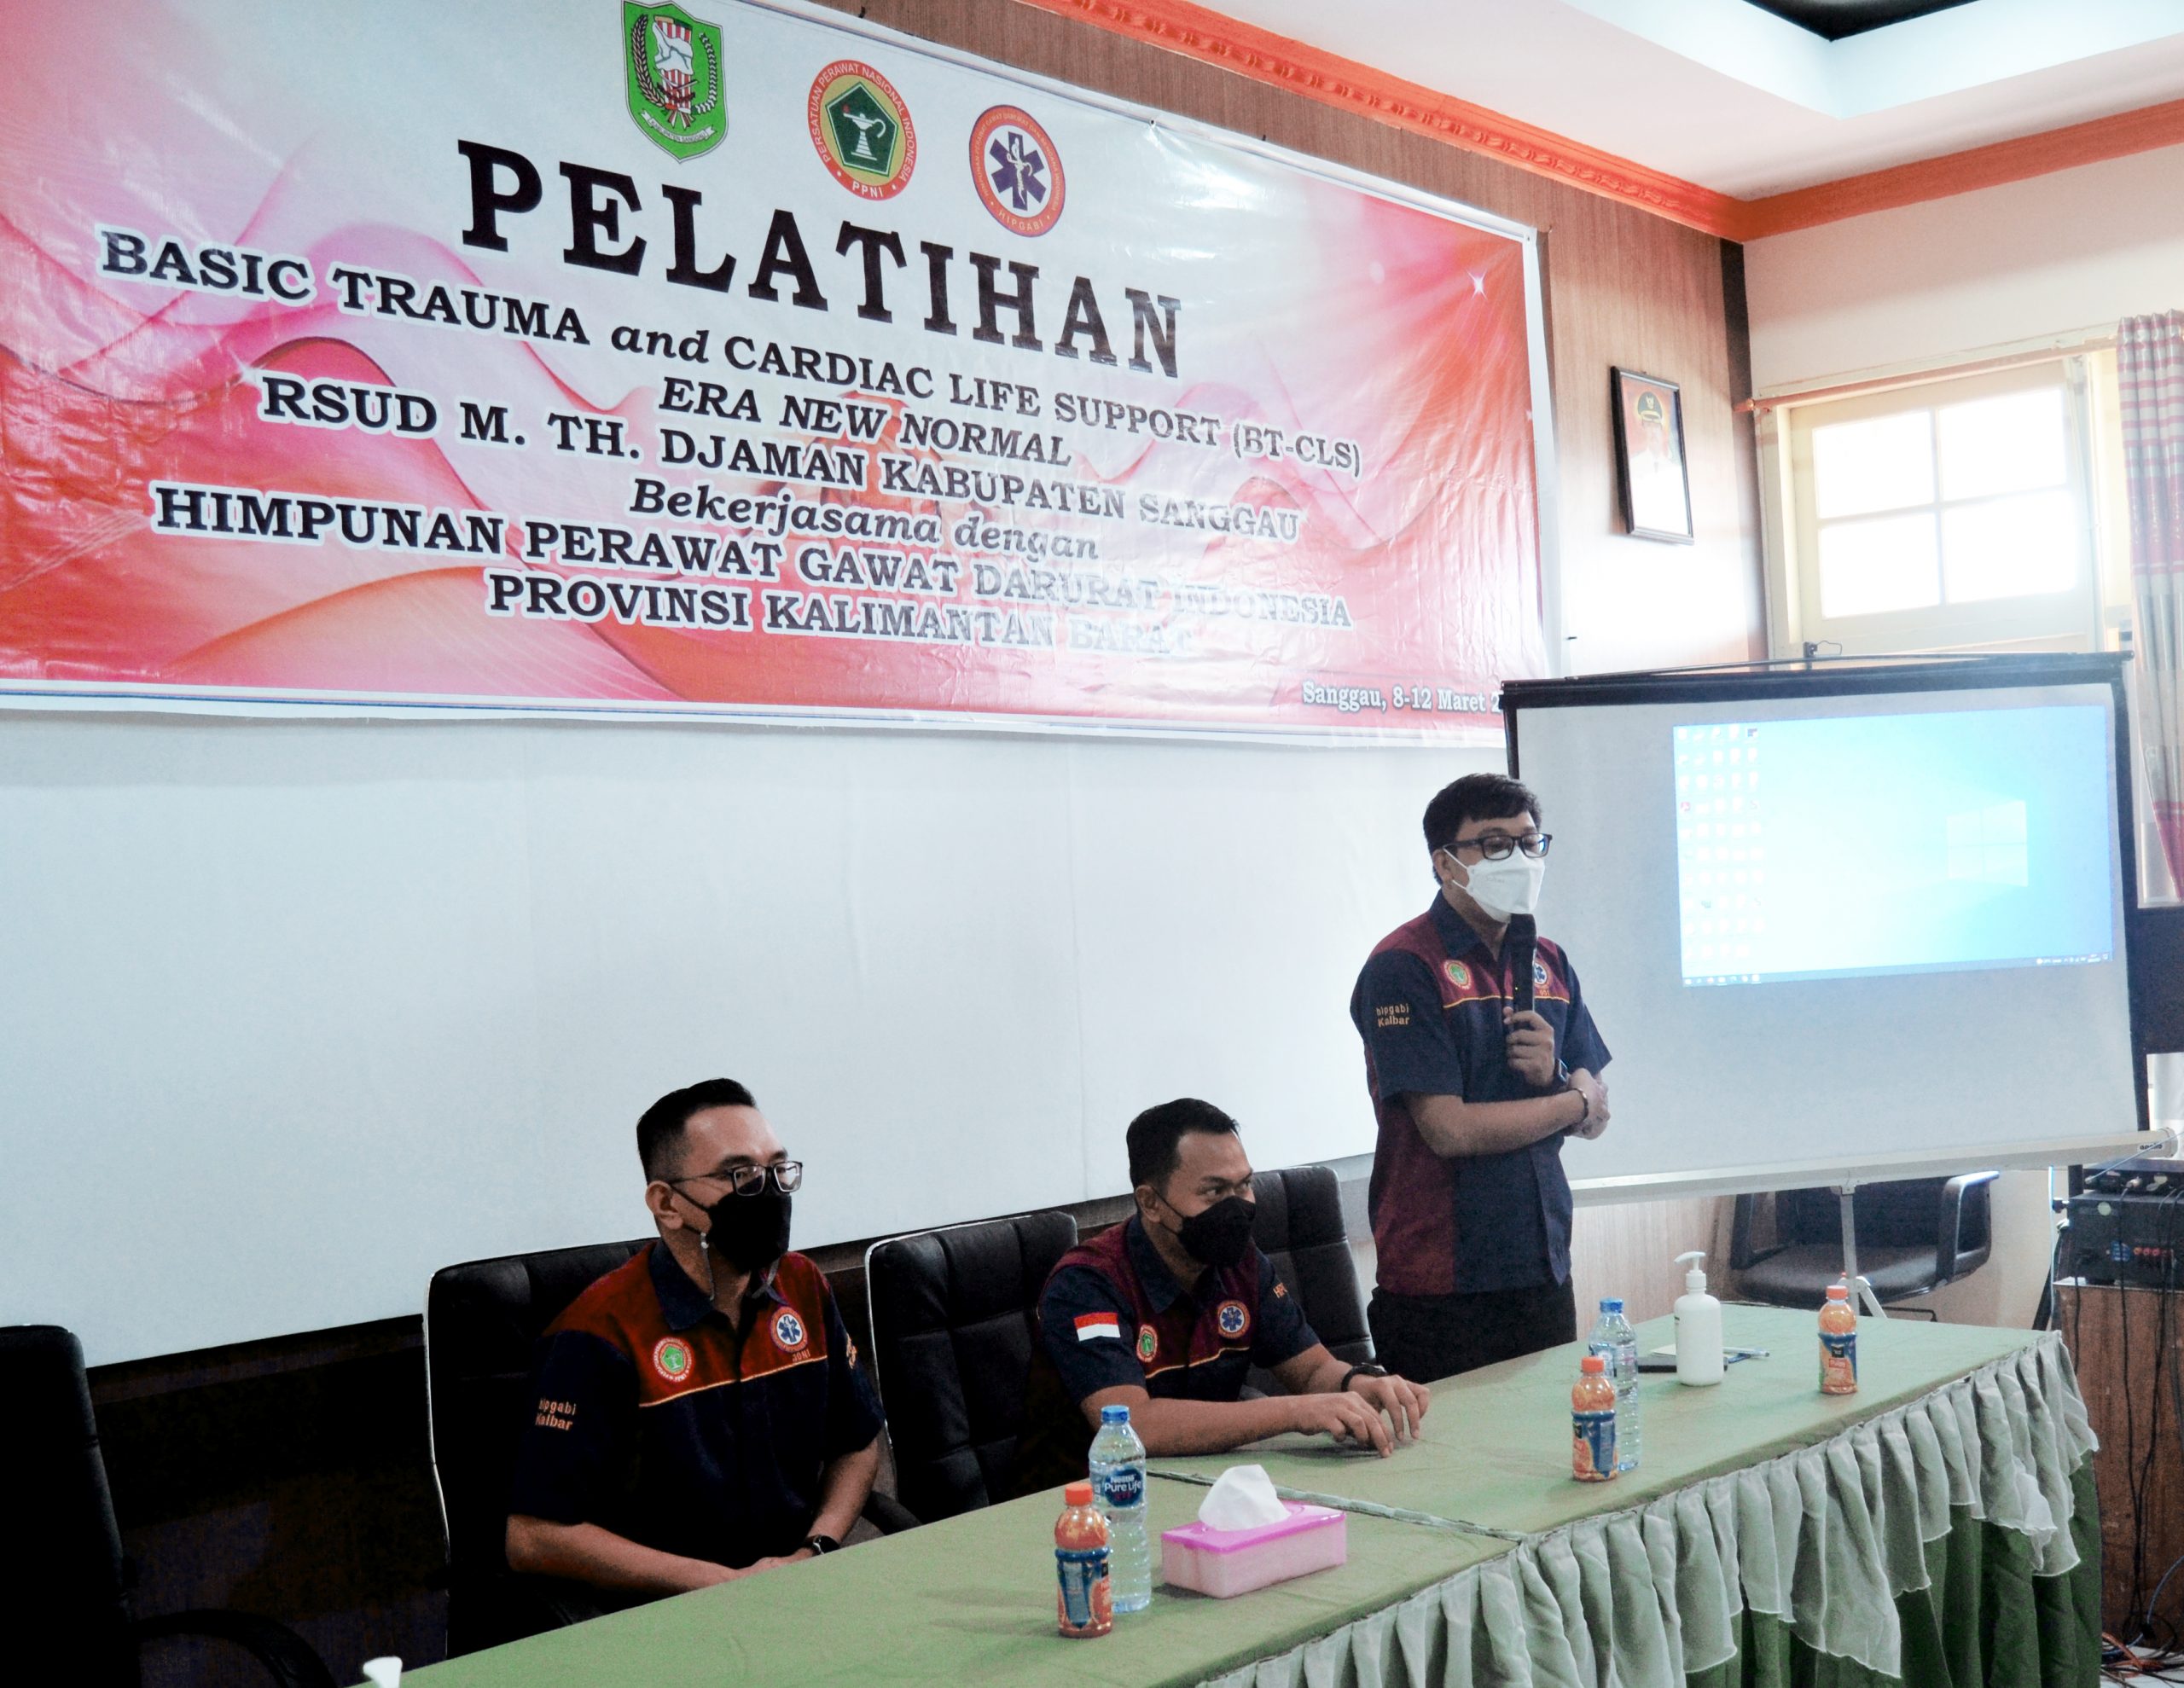 RSUD M. Th. Djaman Kabupaten Sanggau mengadakan Pelatihan “Basic Trauma and Cardiac Life Support (BT-CLS)” di Era New Normal